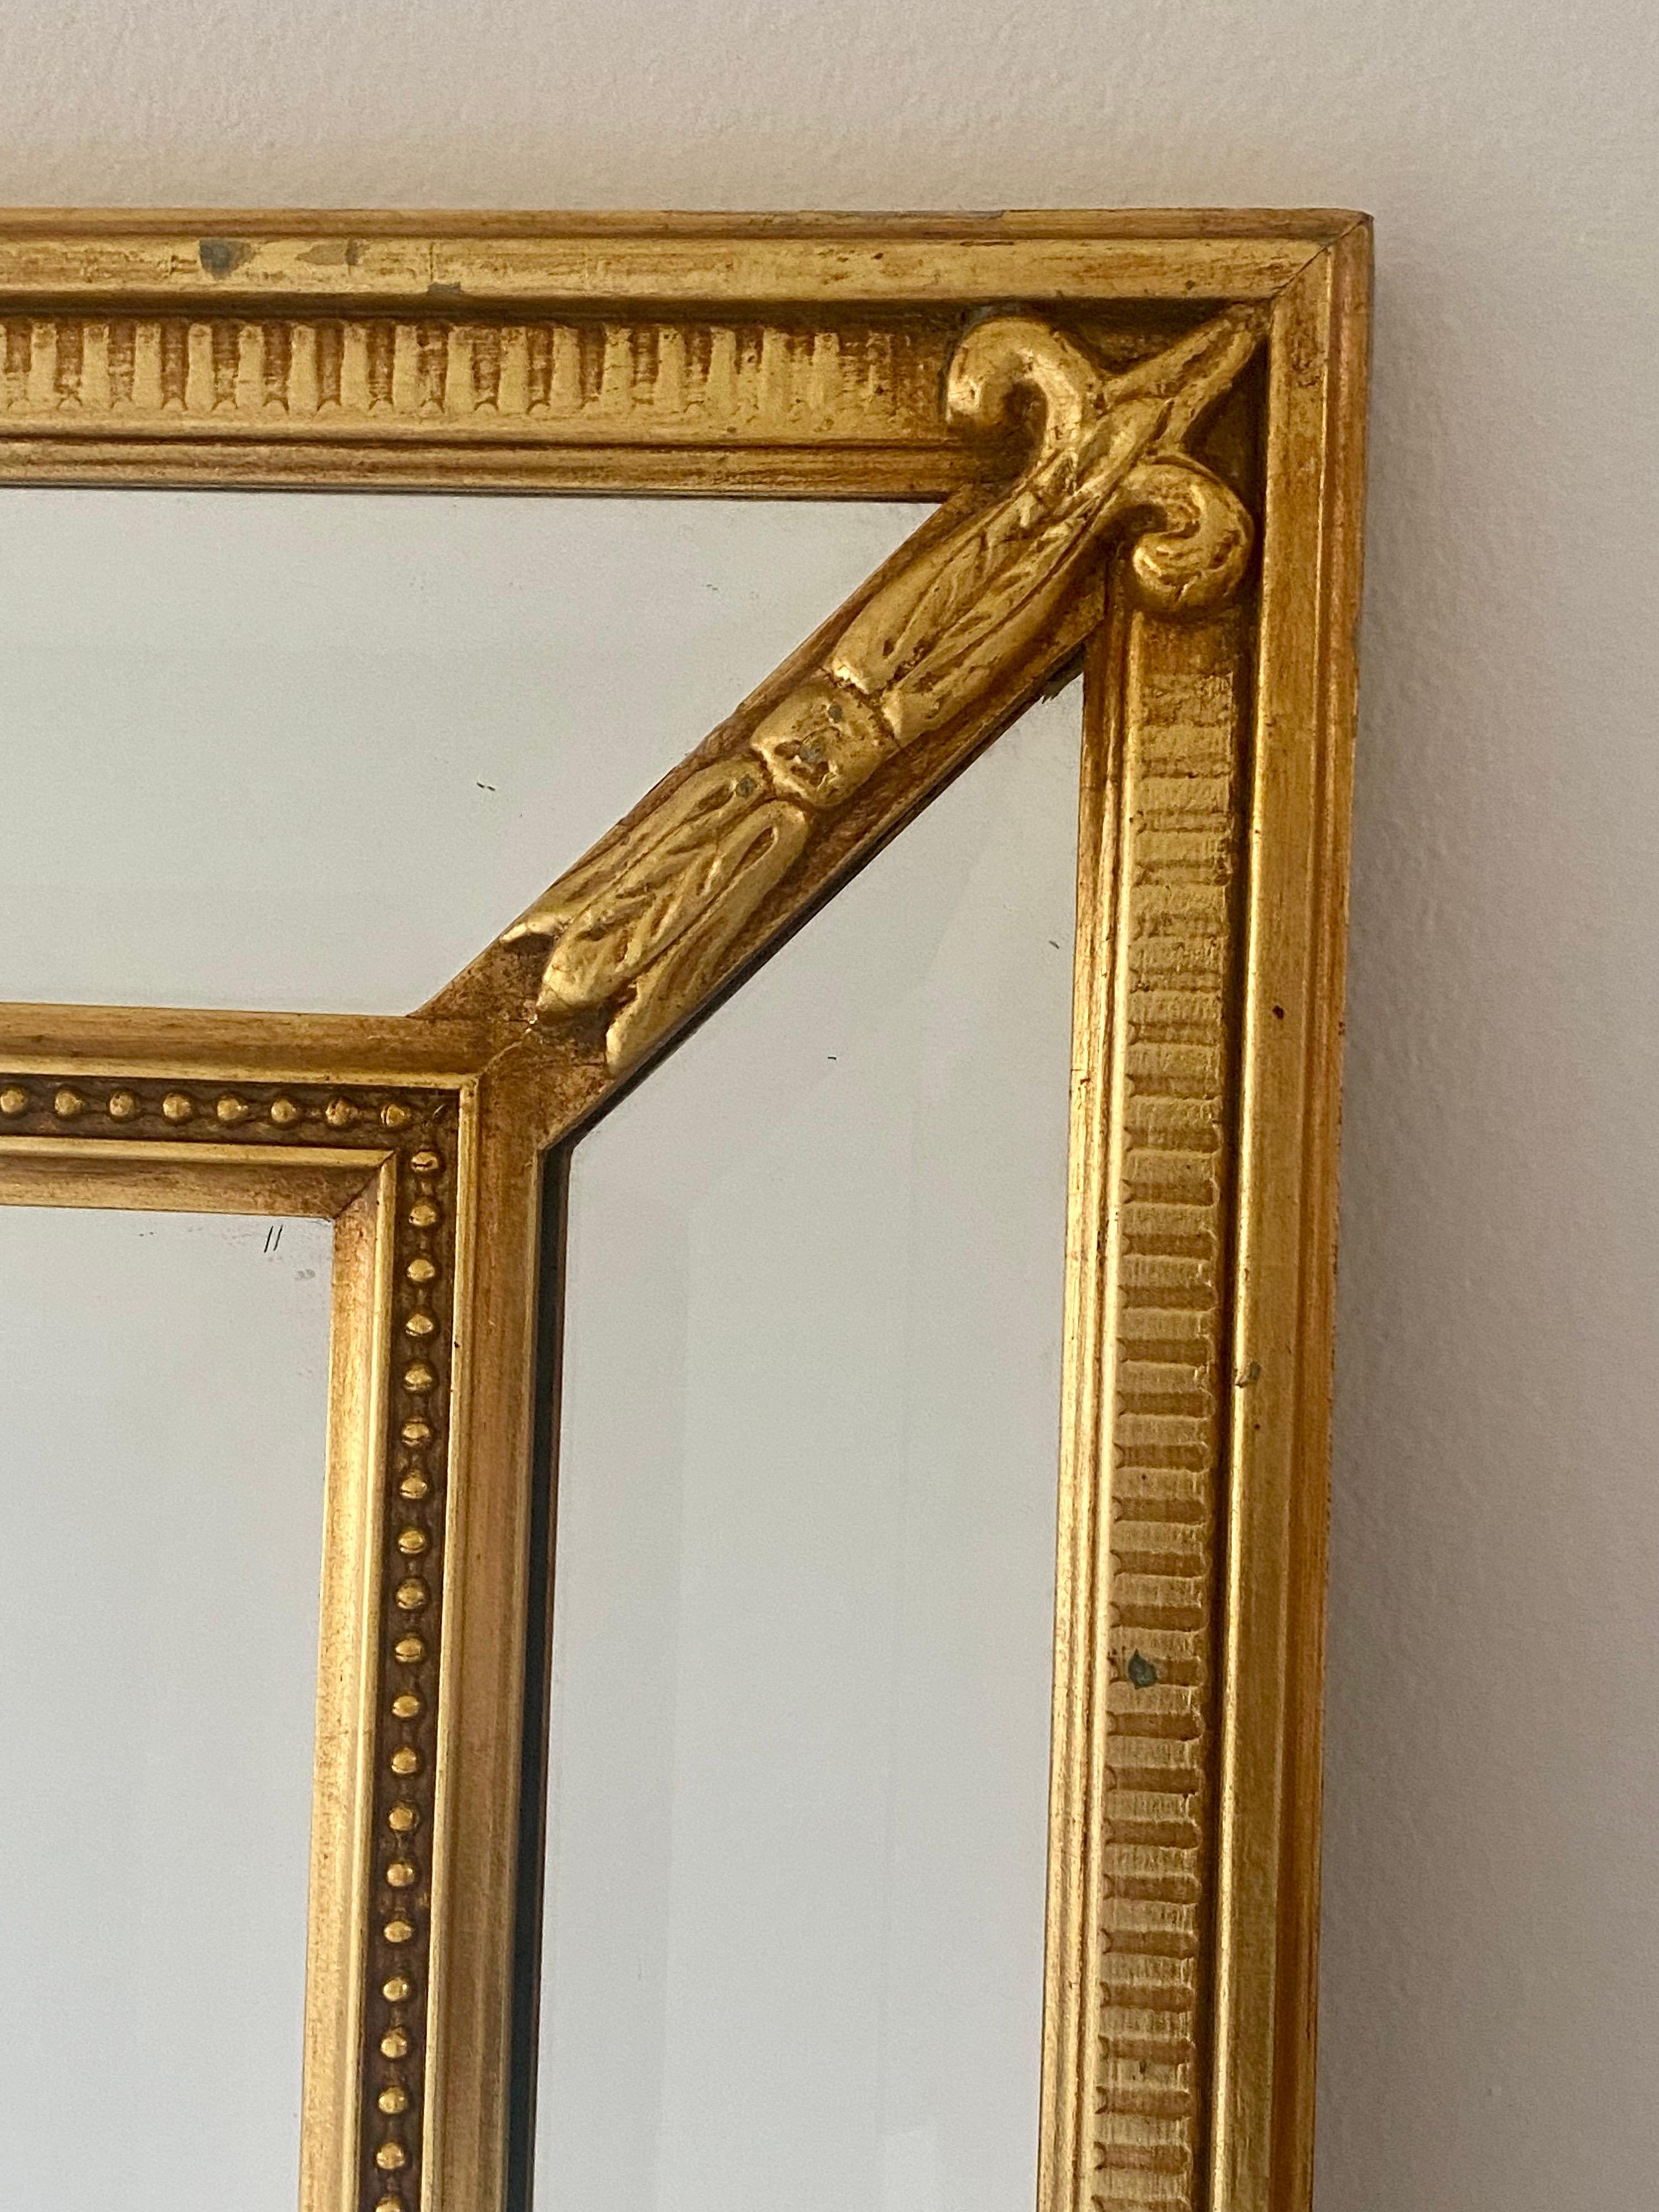 Sublime Fleur de Lys gilt wood frame multiple Beveled mirror Pieces, circa 1950s, from a Palm Beach Estate.